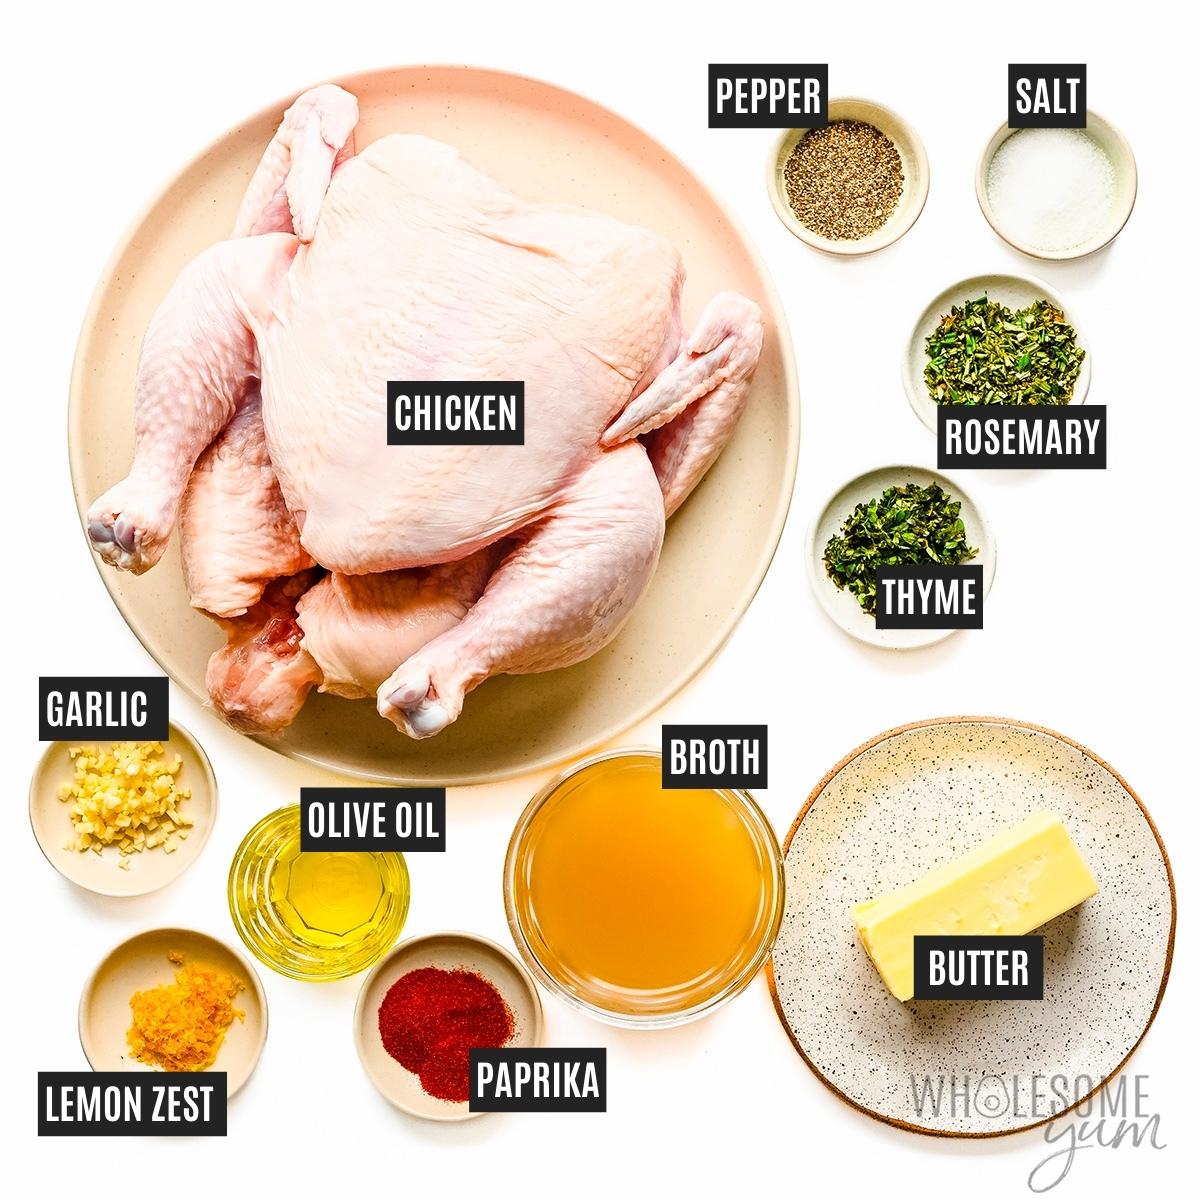 Roasted chicken recipe ingredients.